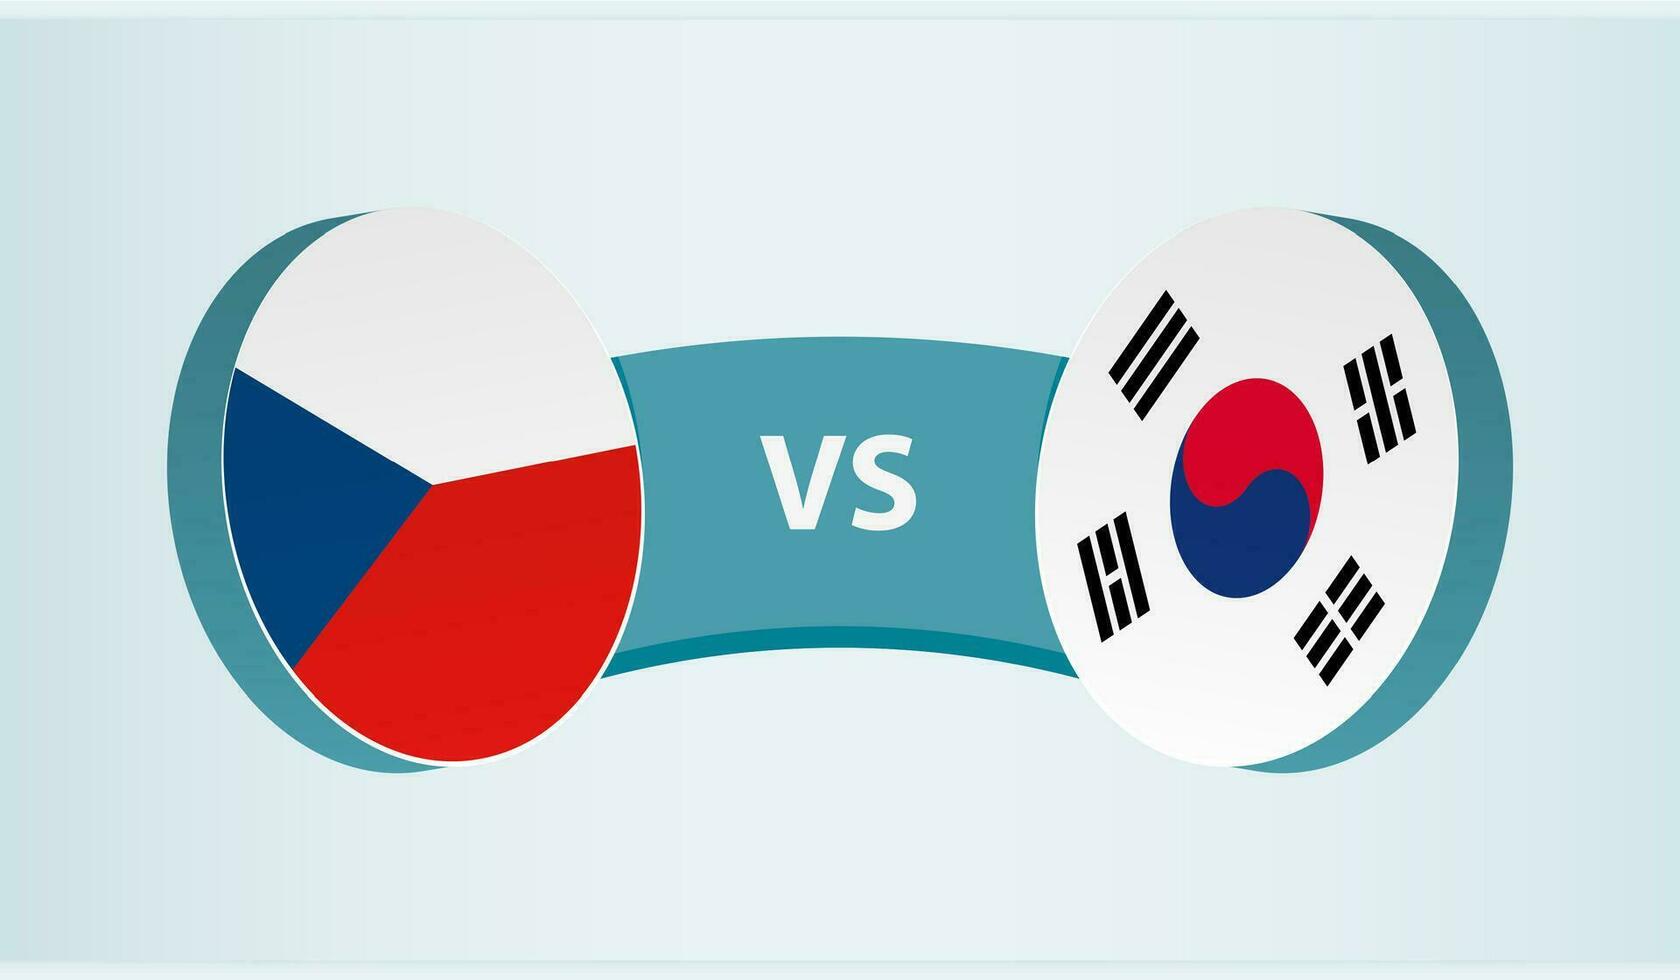 tcheco república versus sul Coréia, equipe Esportes concorrência conceito. vetor